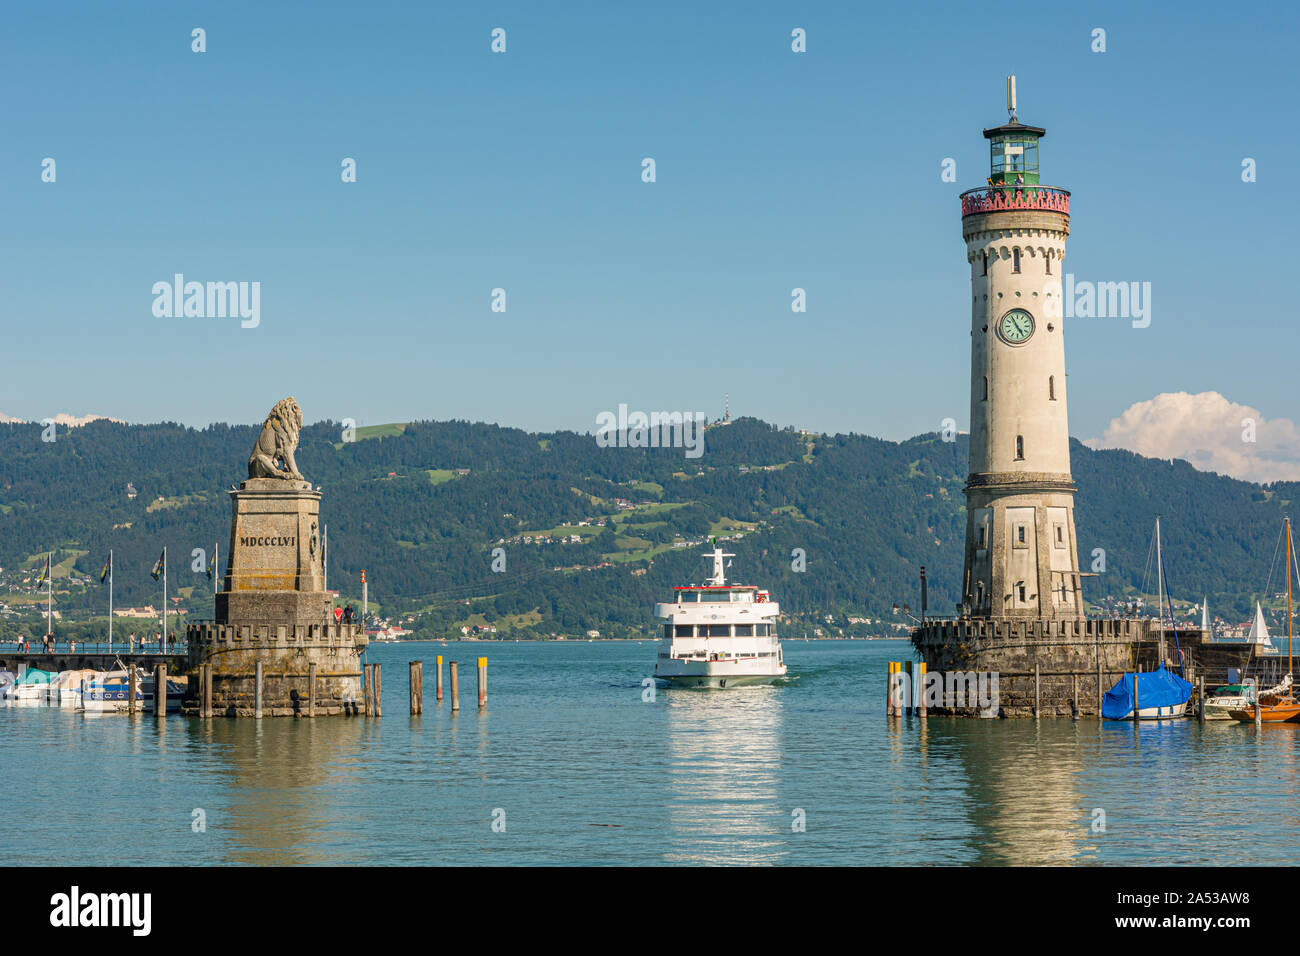 Picturesque lake port with famous bavarian lion entrance. Stock Photo